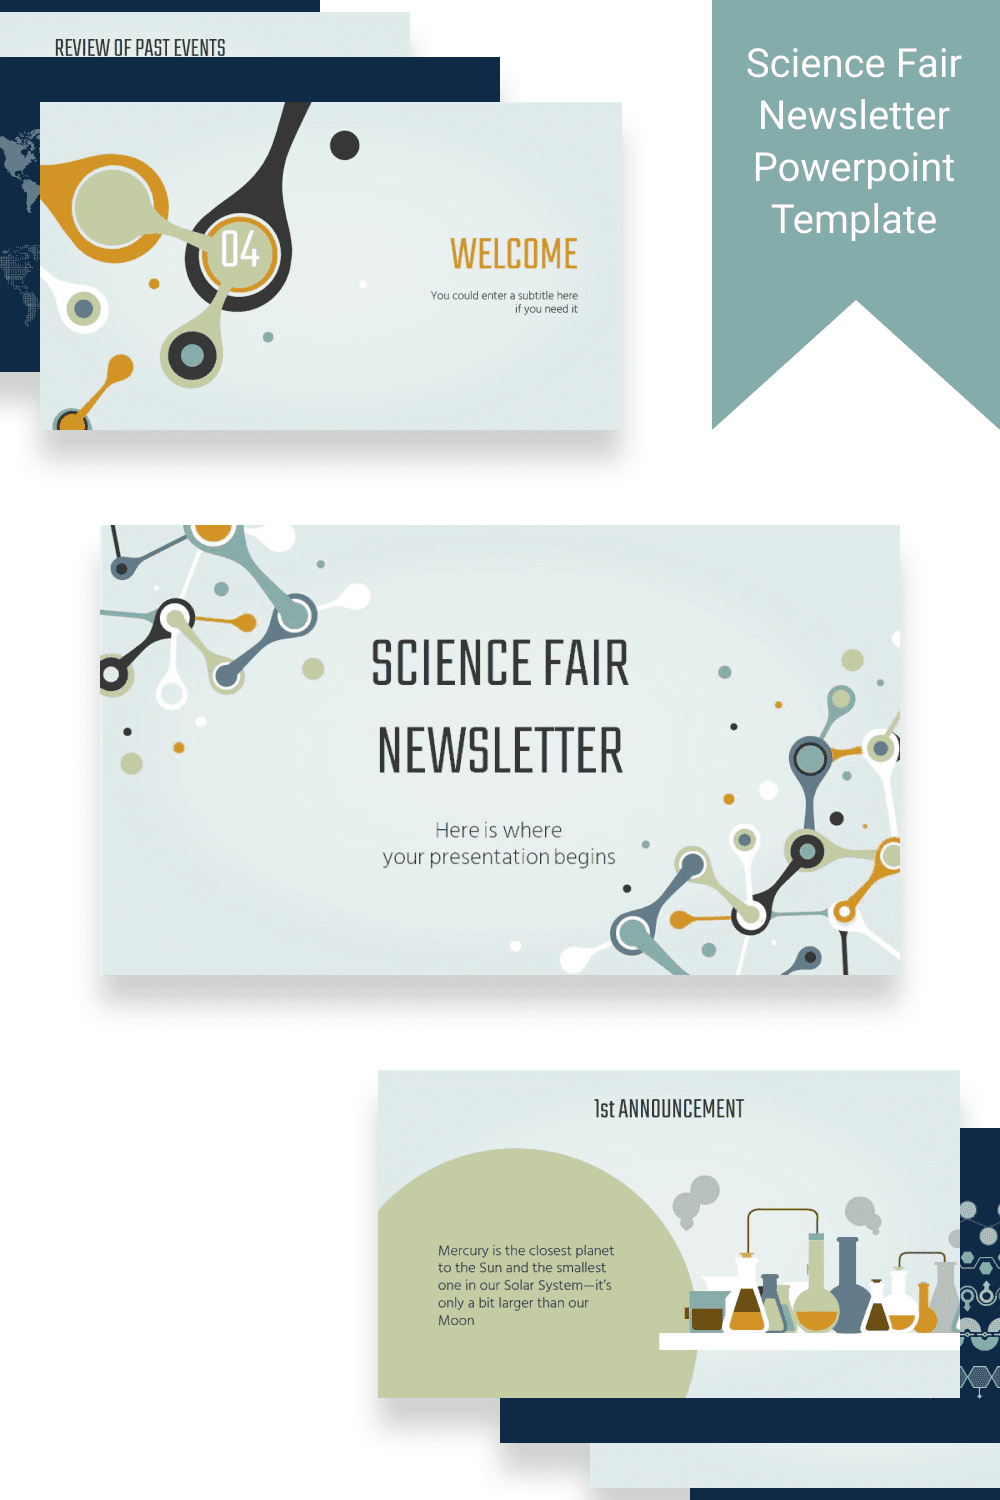 Science Fair Newsletter by MasterBundles Pinterest Collage Image.